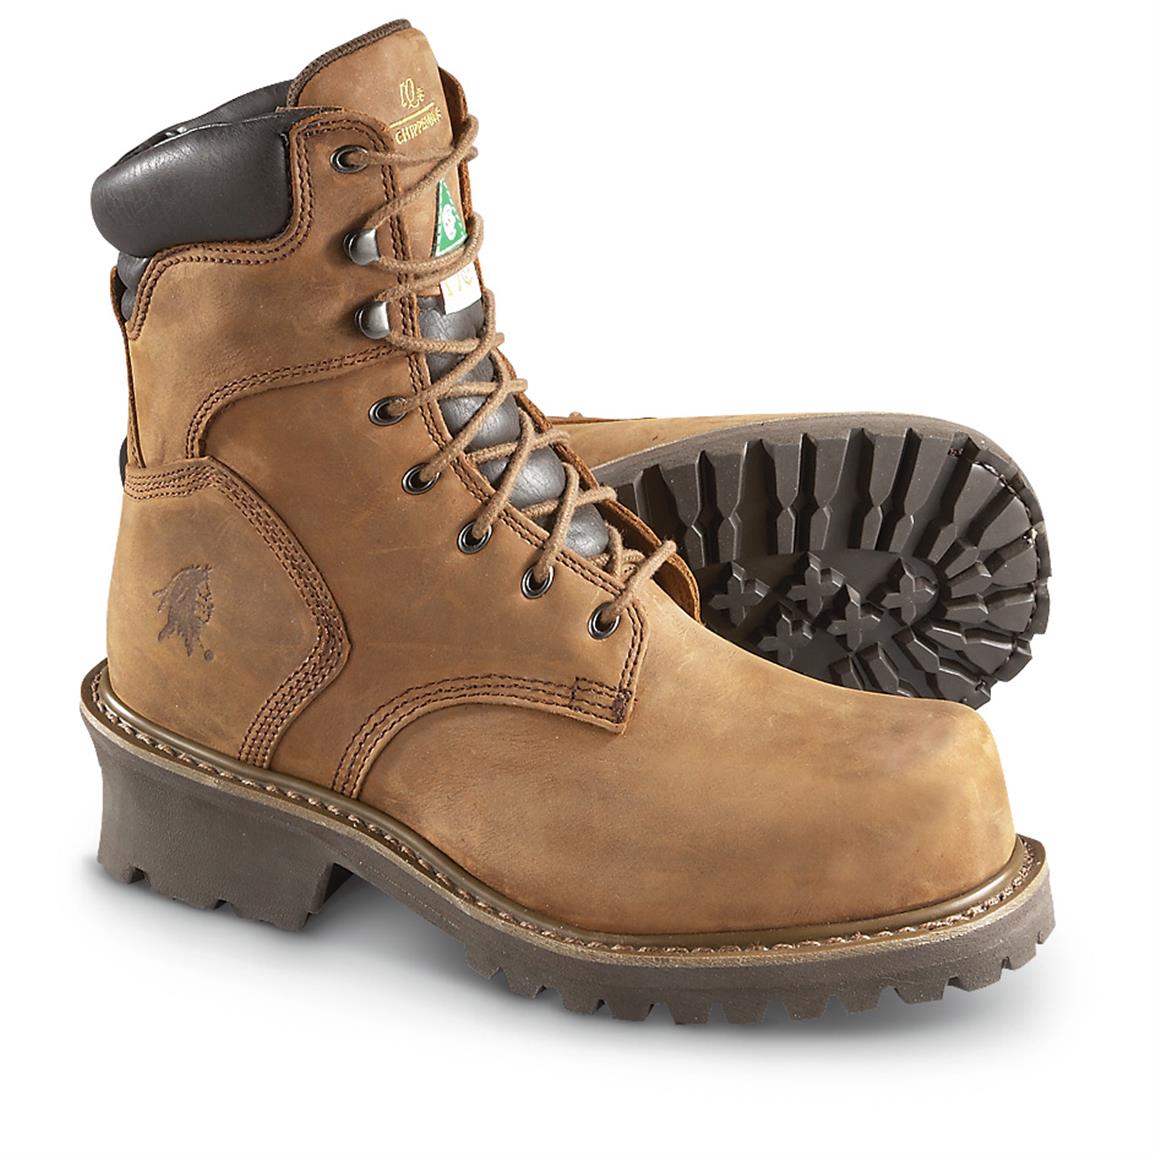 Men's Chippewa Boots IQ 8" Steel Toe Logger Boots, Brown